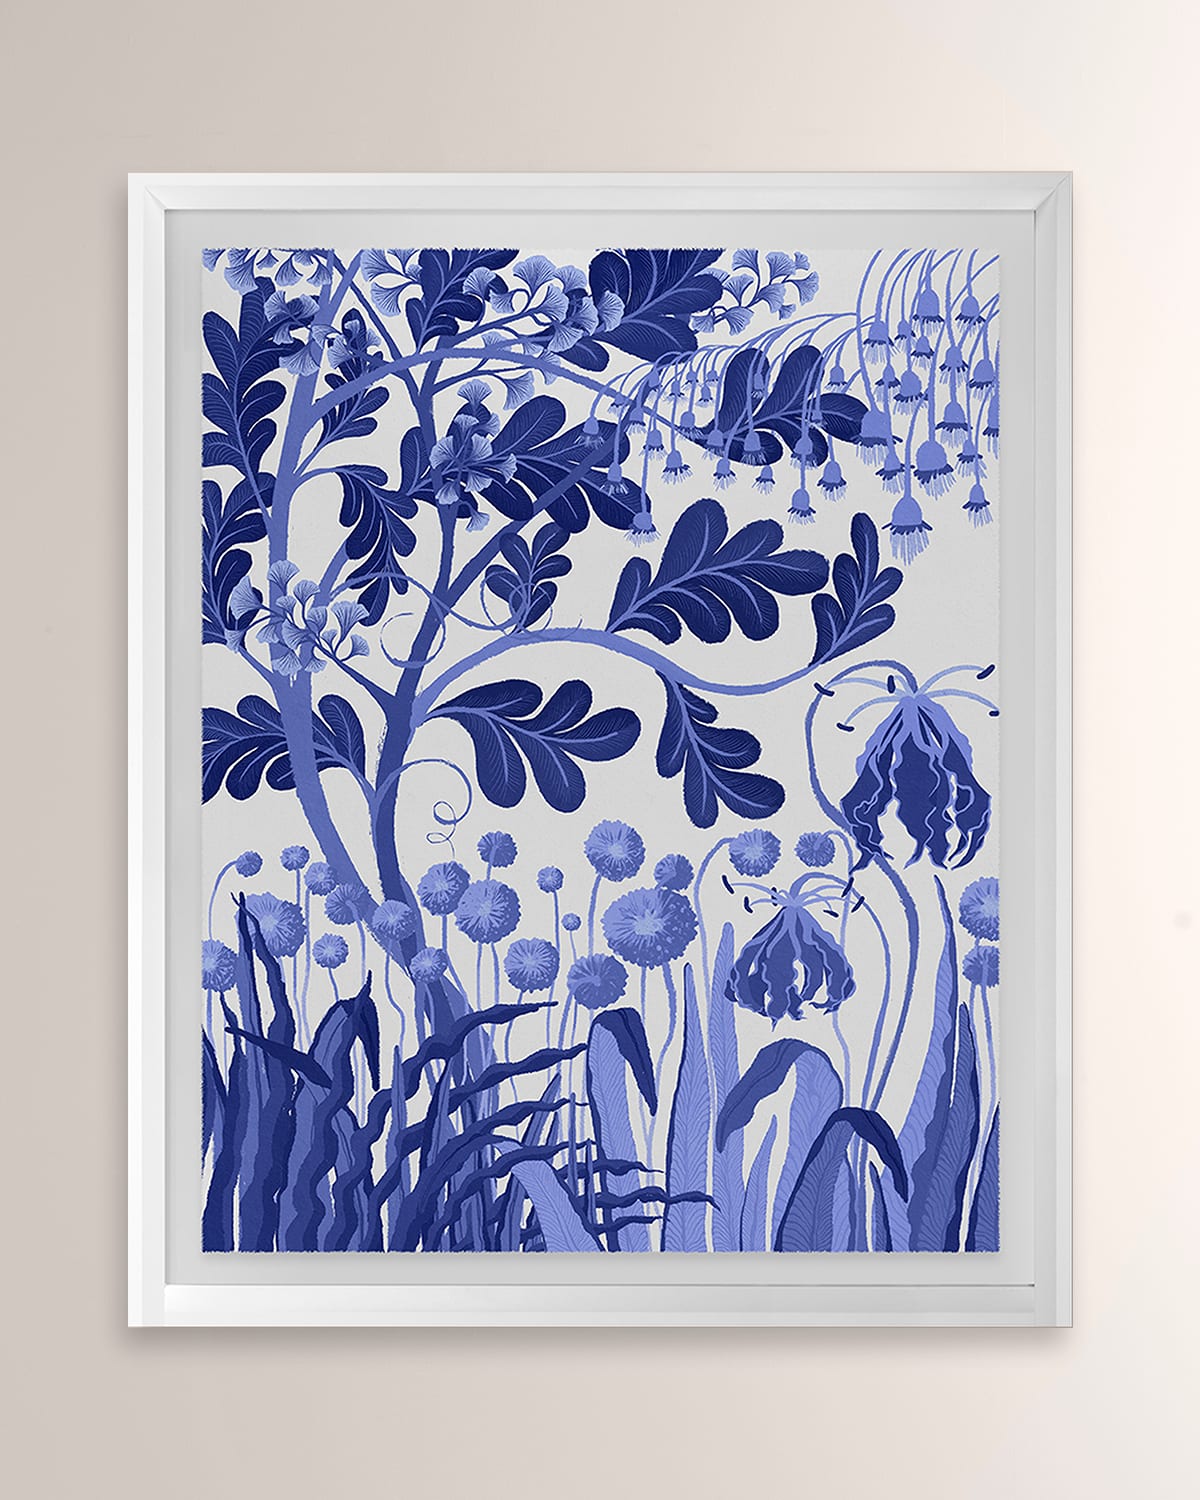 Peculiar Blooms 7 Digital Art Print by Victoria Neiman